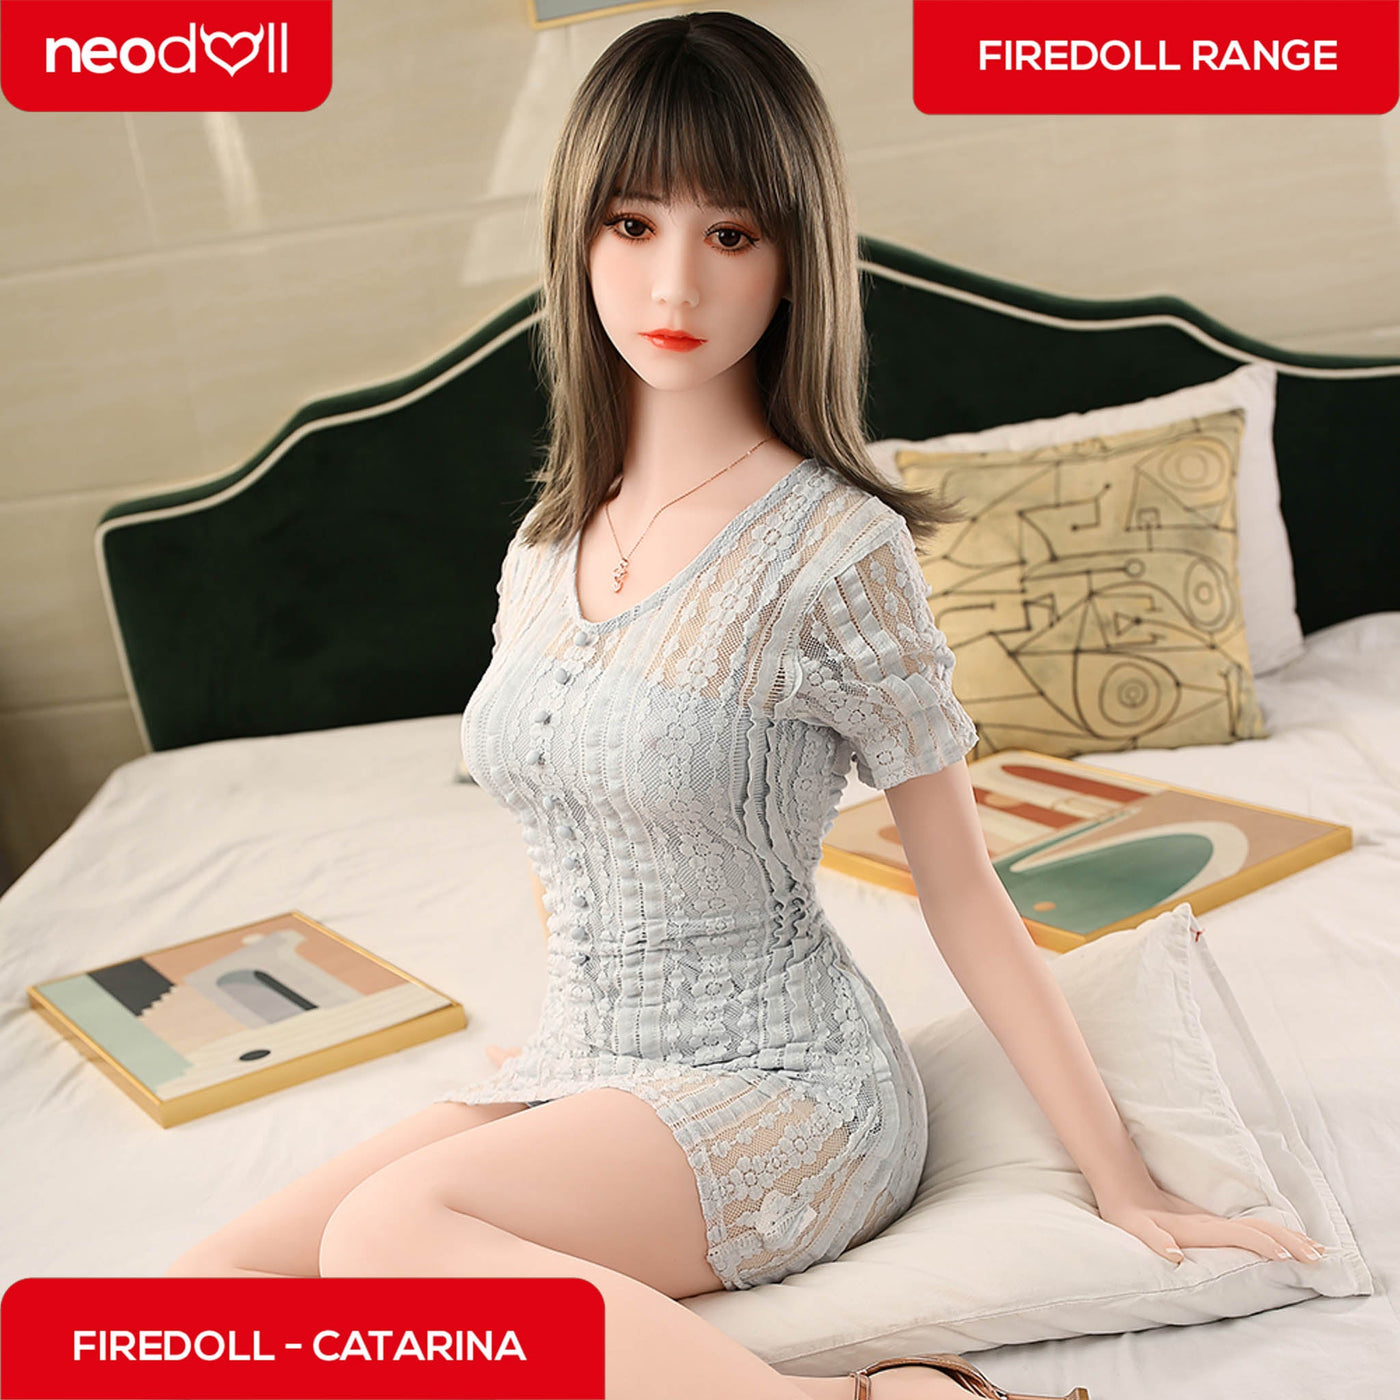 Fire Doll - Catarina - Realistic Sex Doll - 166cm - Natural - Gel Breast